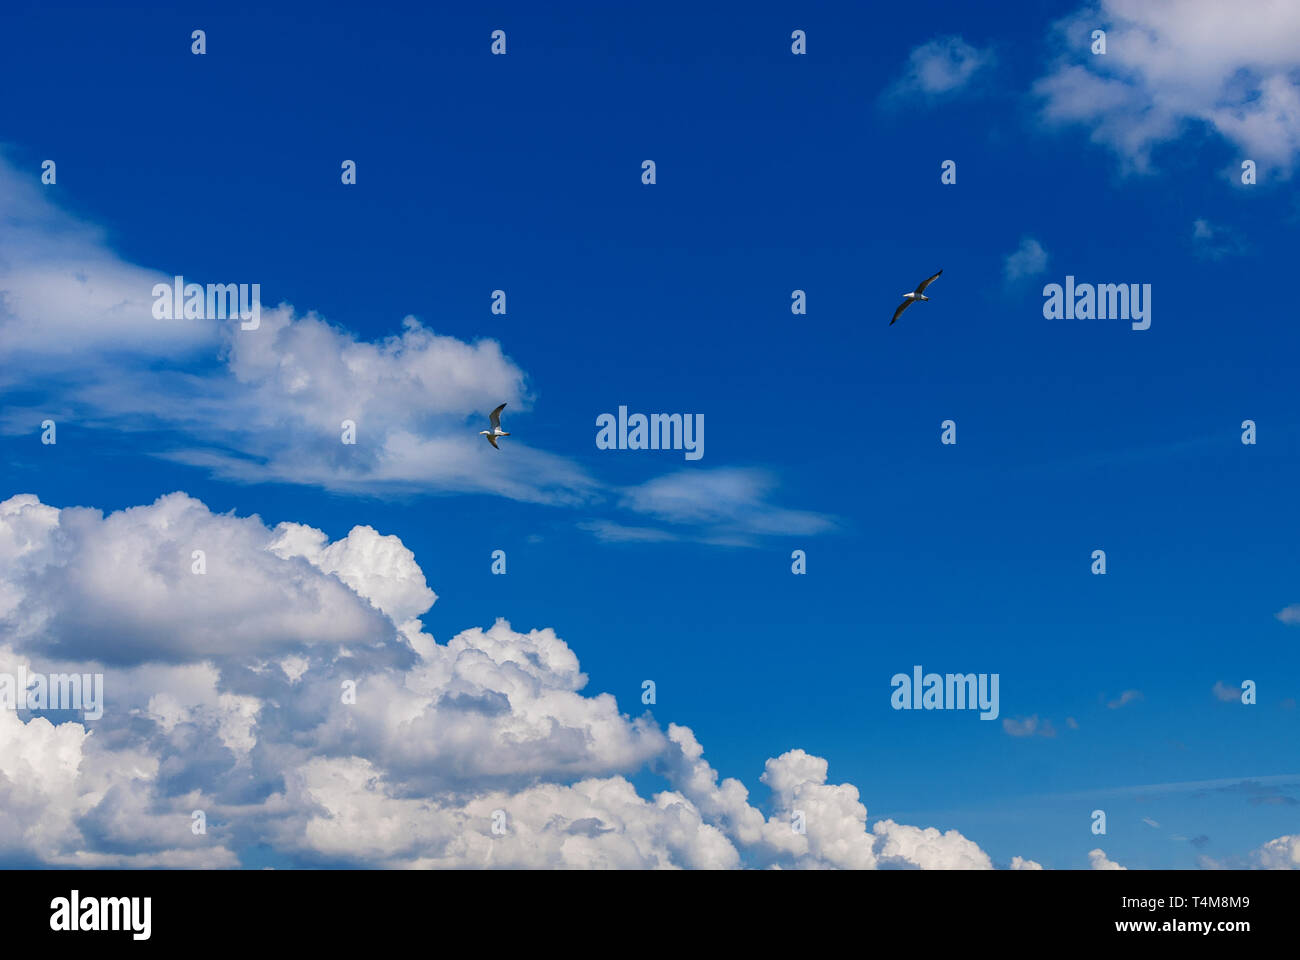 Dos gaviotas volando en un hermoso cielo azul con nubes blancas como fondo Foto de stock